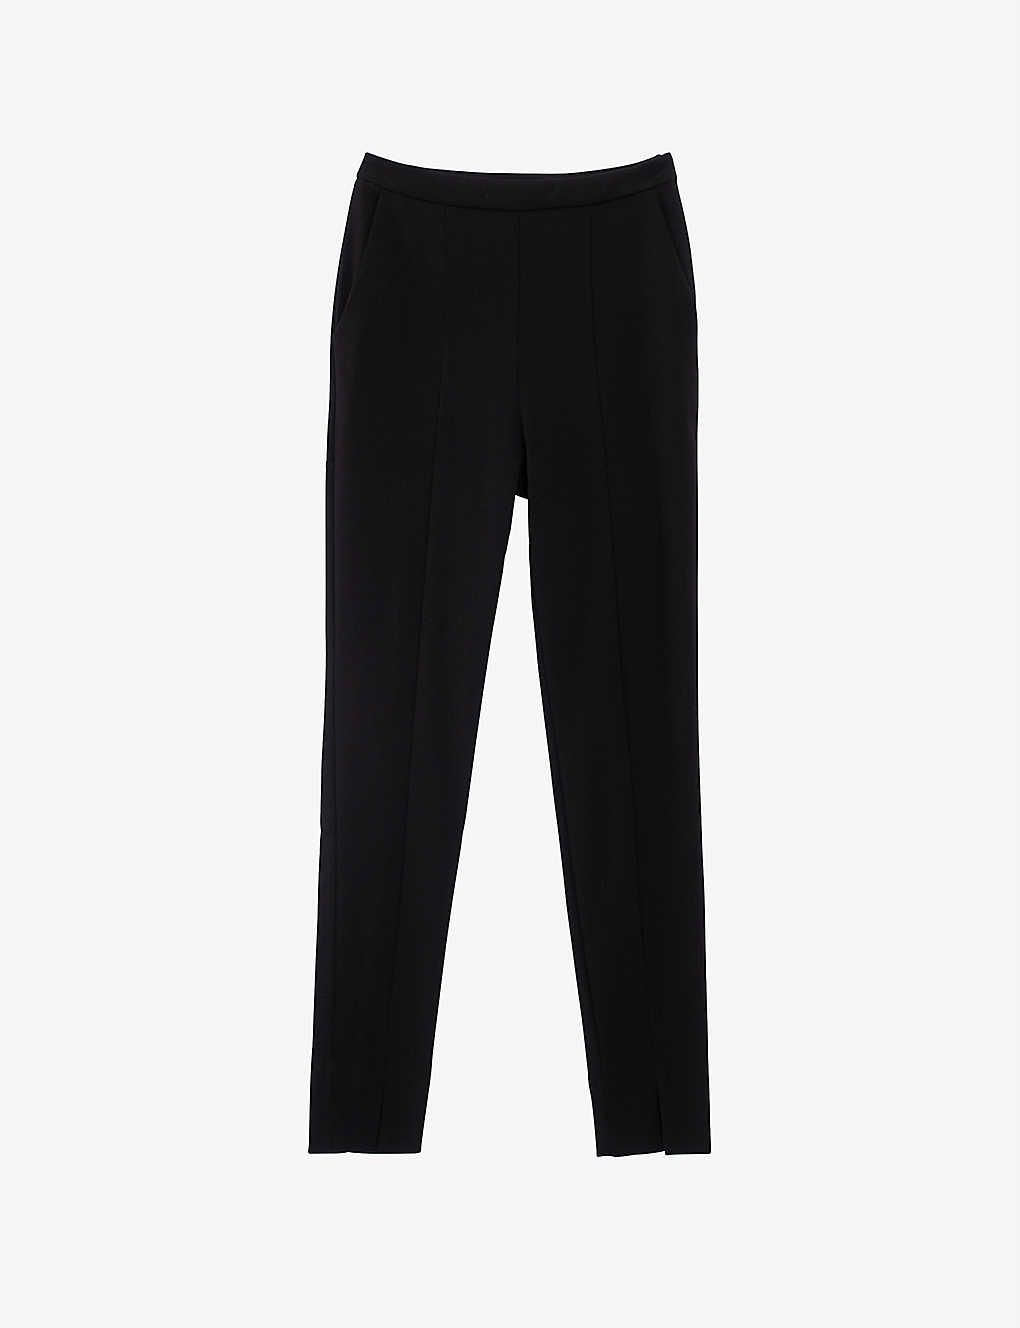 Ikks Women's Black 7/8 Tapered High-rise Woven Trousers